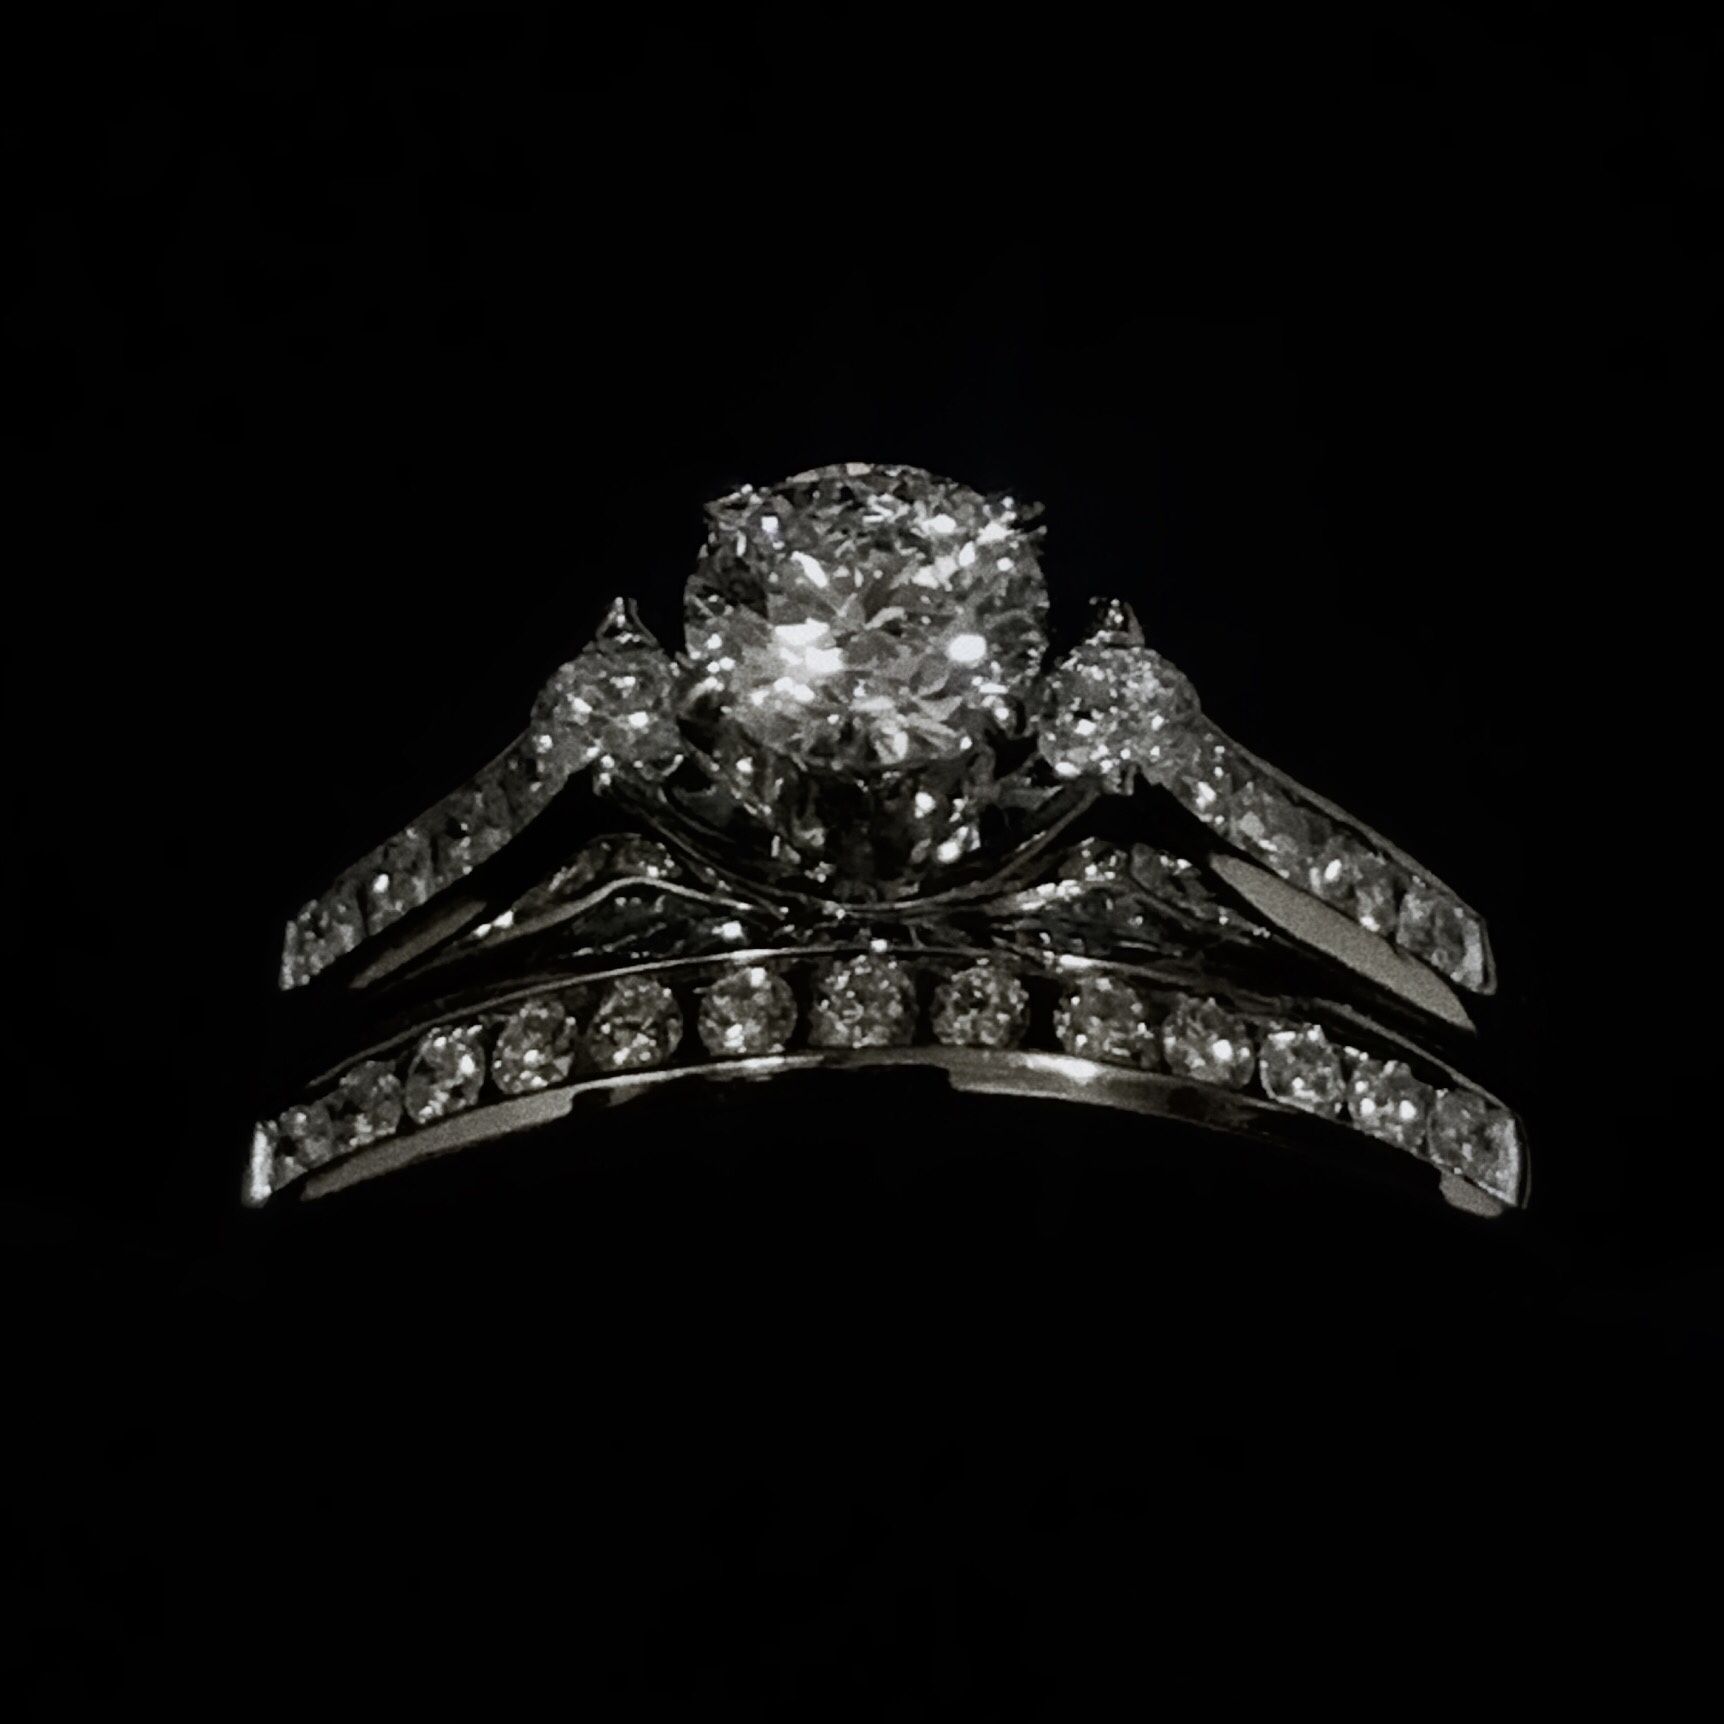 Wedding band / engagement ring